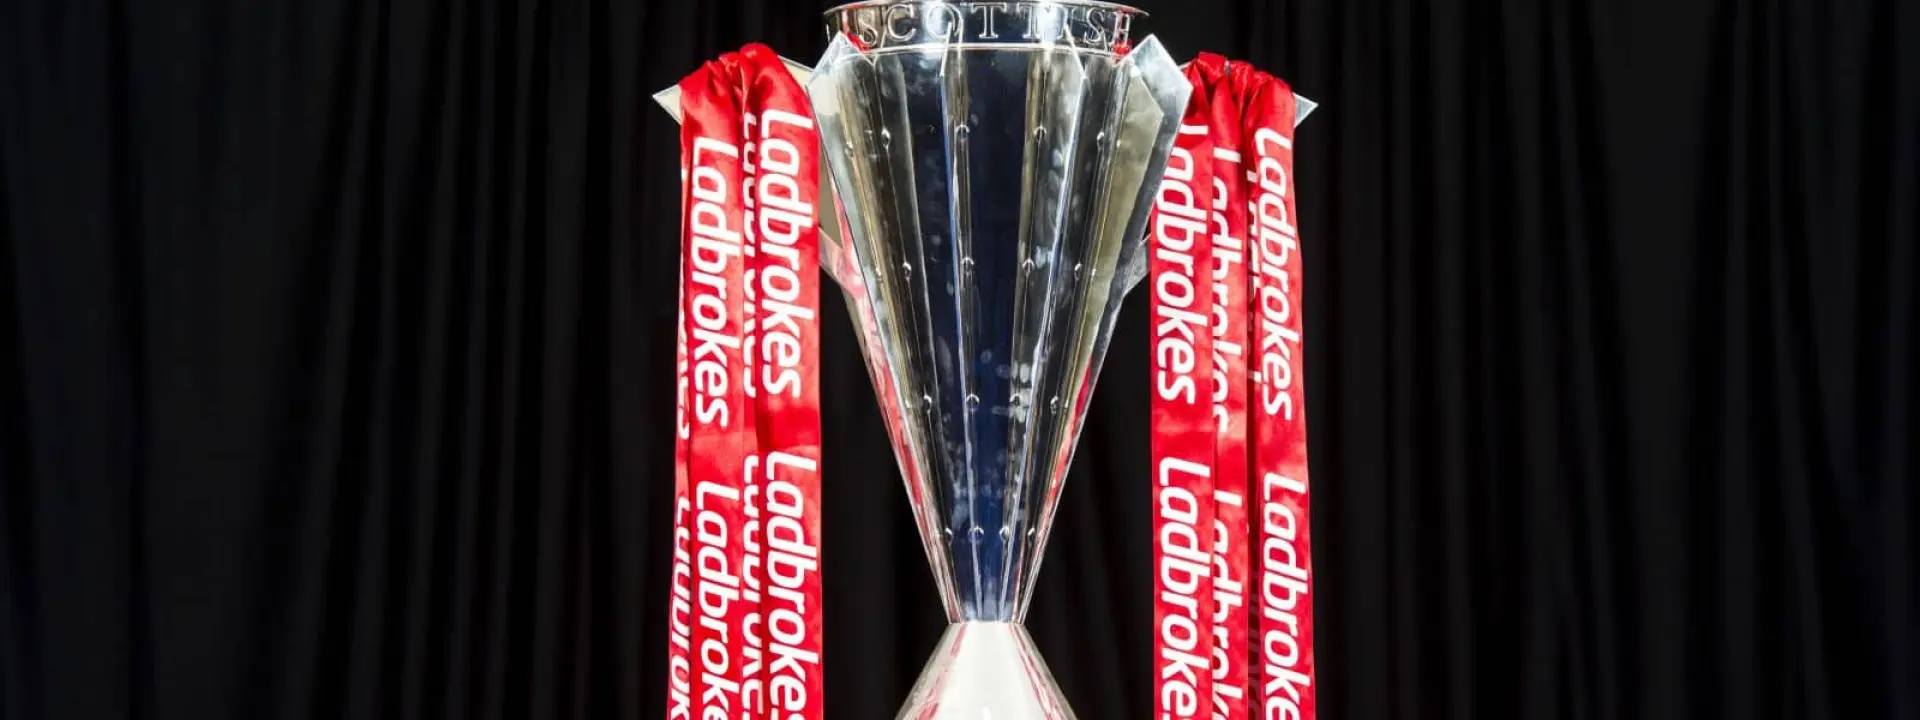 ladbrokes-scottish-premiership-trophy